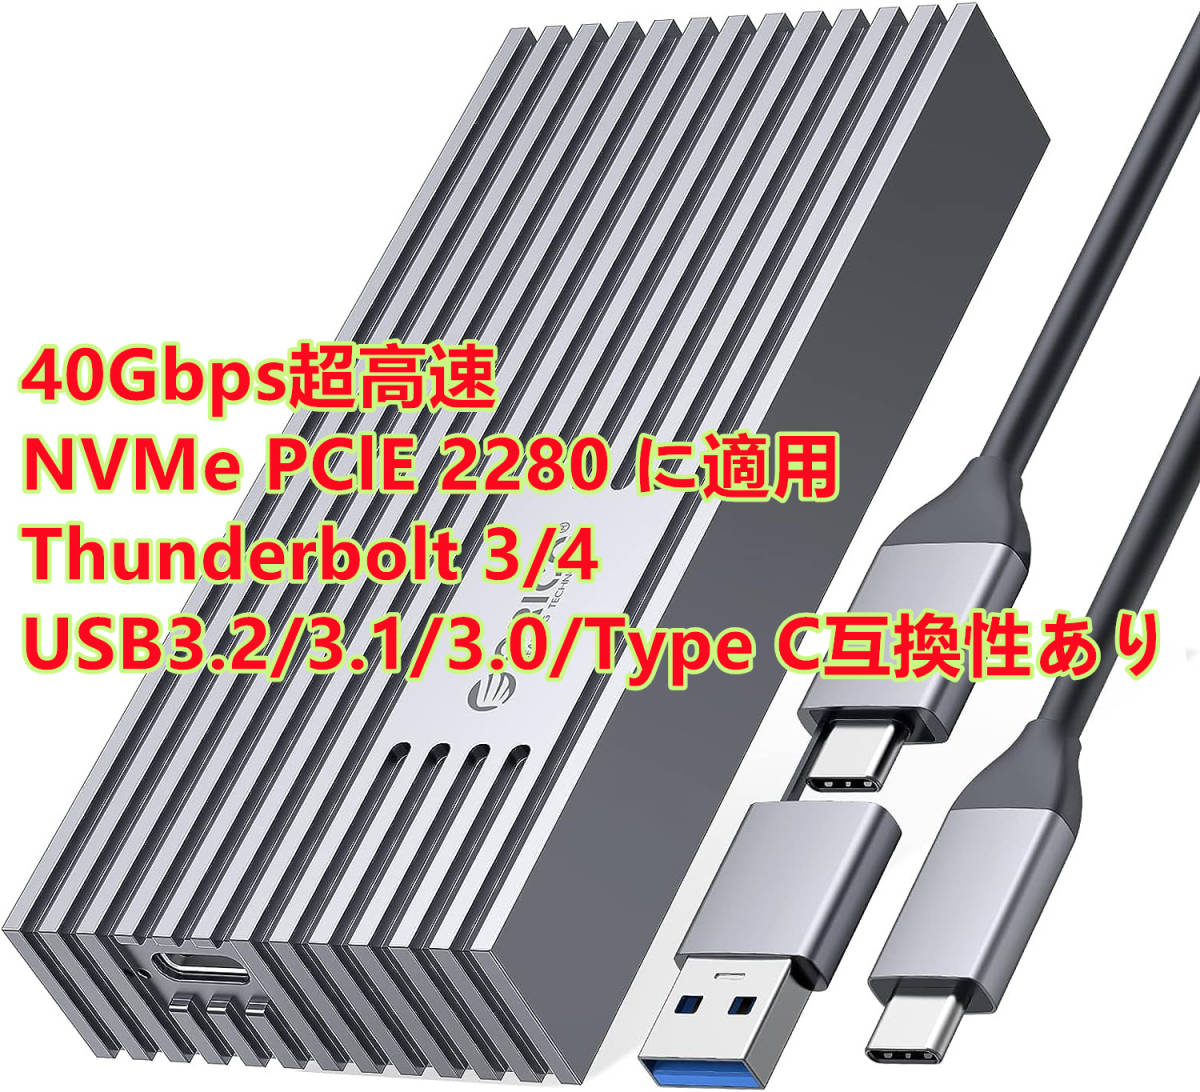 OY19 ORICO M.2 SSD 外付けケース 40Gbps 4TB NVMe PClE M-Key(B+M Key)2280 適用 Thunderbolt 3/4 USB3.2/3.1/3.0/Type C互換性あり_画像1